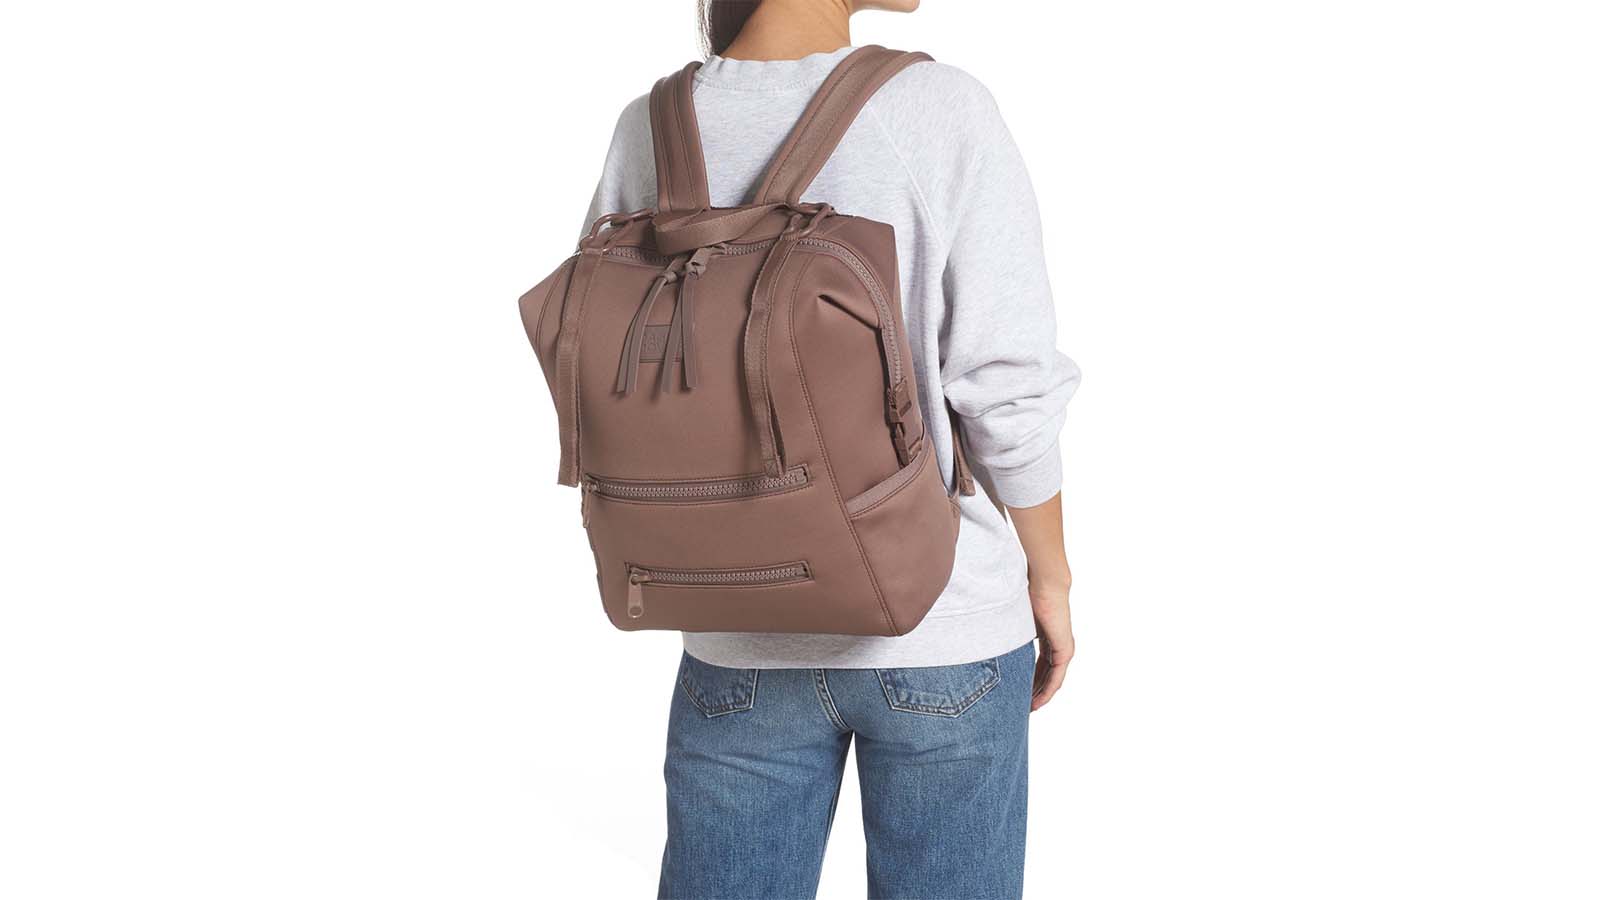 dagne dover backpack size comparison